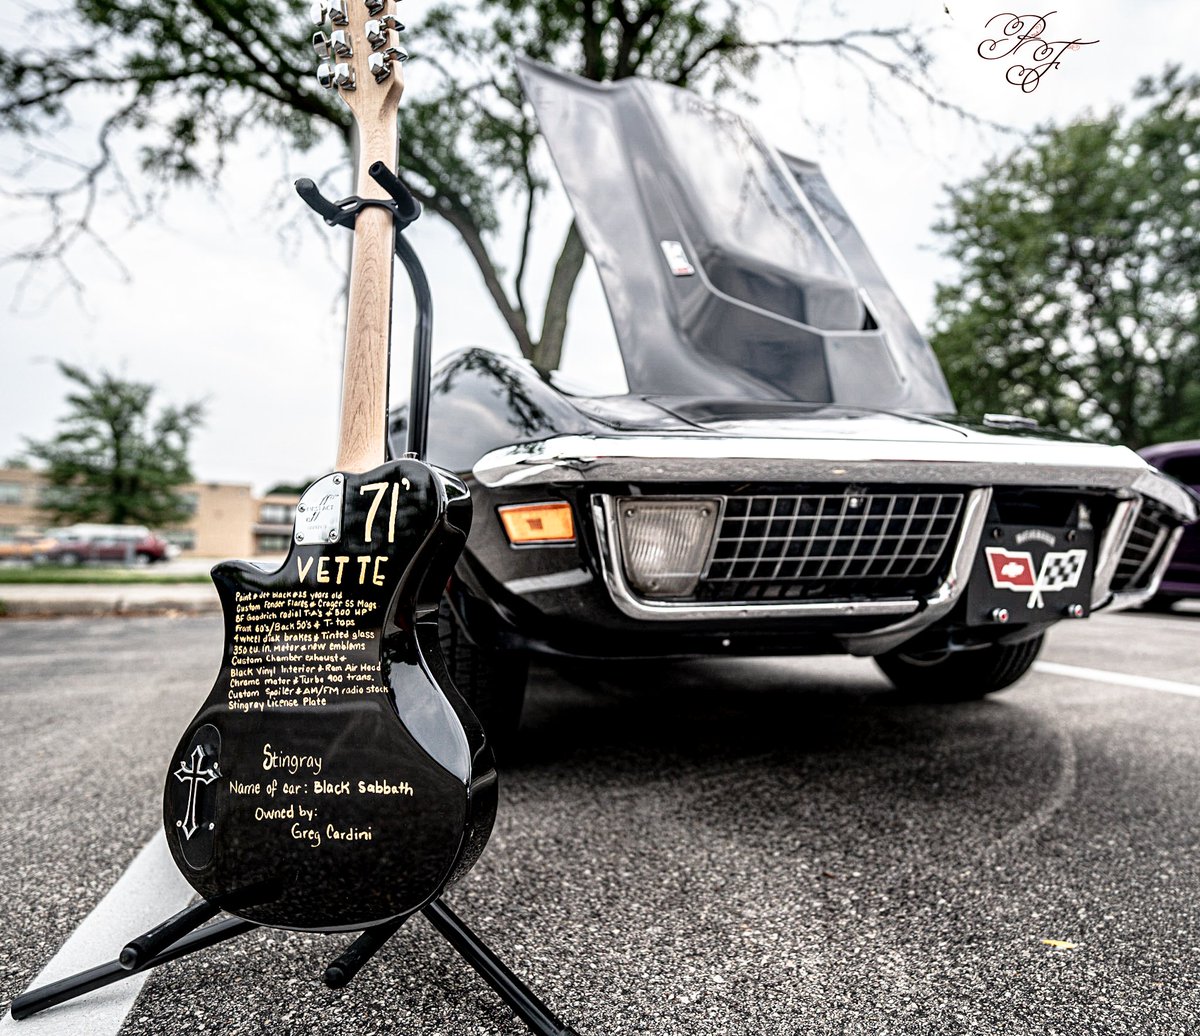 #PresFatePhoto
#PeepFromMyPerspective
#SonyA7rII
#Sony14mmF18
#MyVision
#Art
#OldSkool
#ThatVetteTho
#Corvette
#StingRay
#Chevy
#71
#Guitar
#Black
#classiccarclub
#Muscle
#Legendary
#Summer
#2021
#BlackSabbath
#ExplorePage